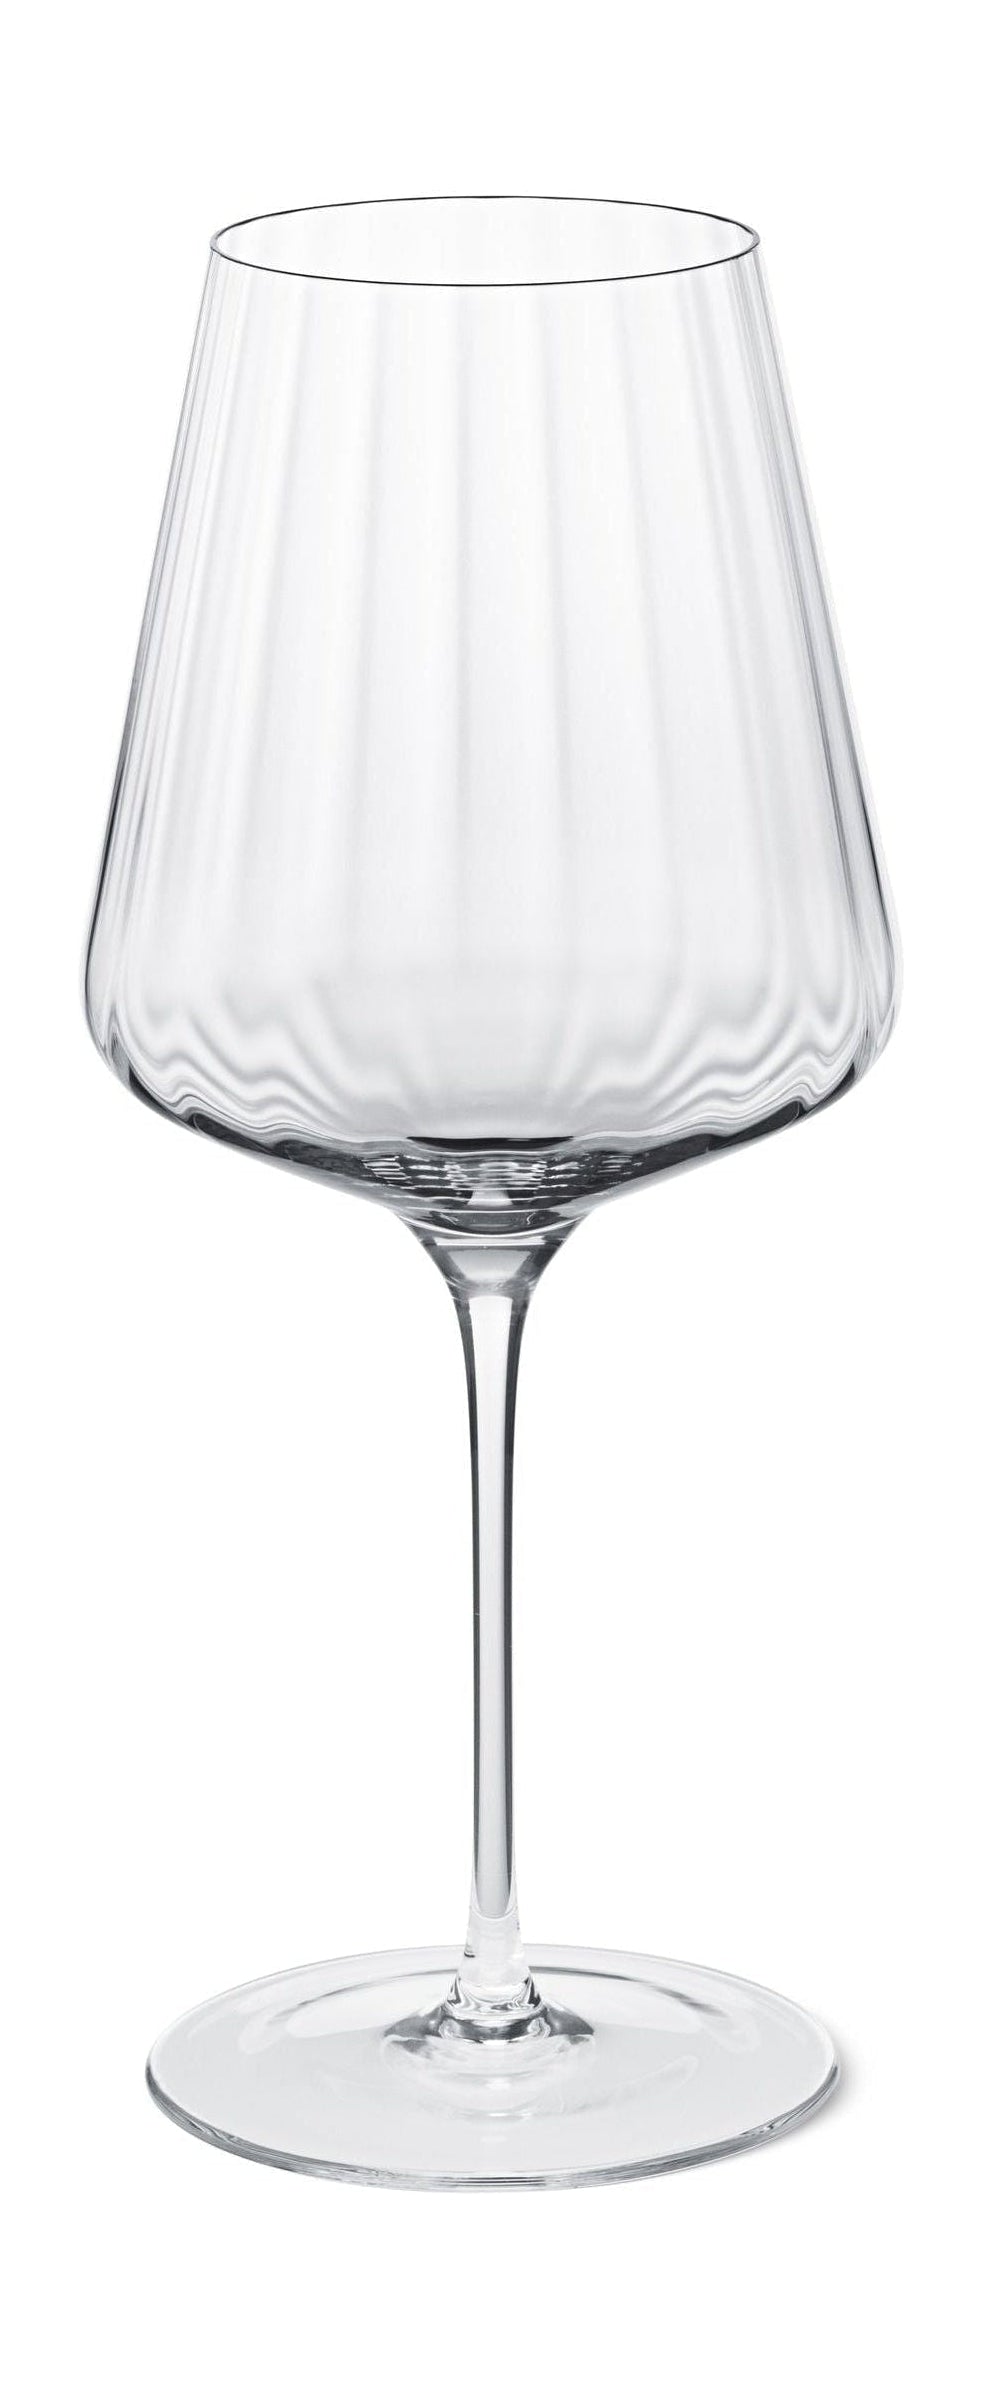 Georg Jensen Bernadotte Red Wine Glasses 54 Cl, 6 Pcs